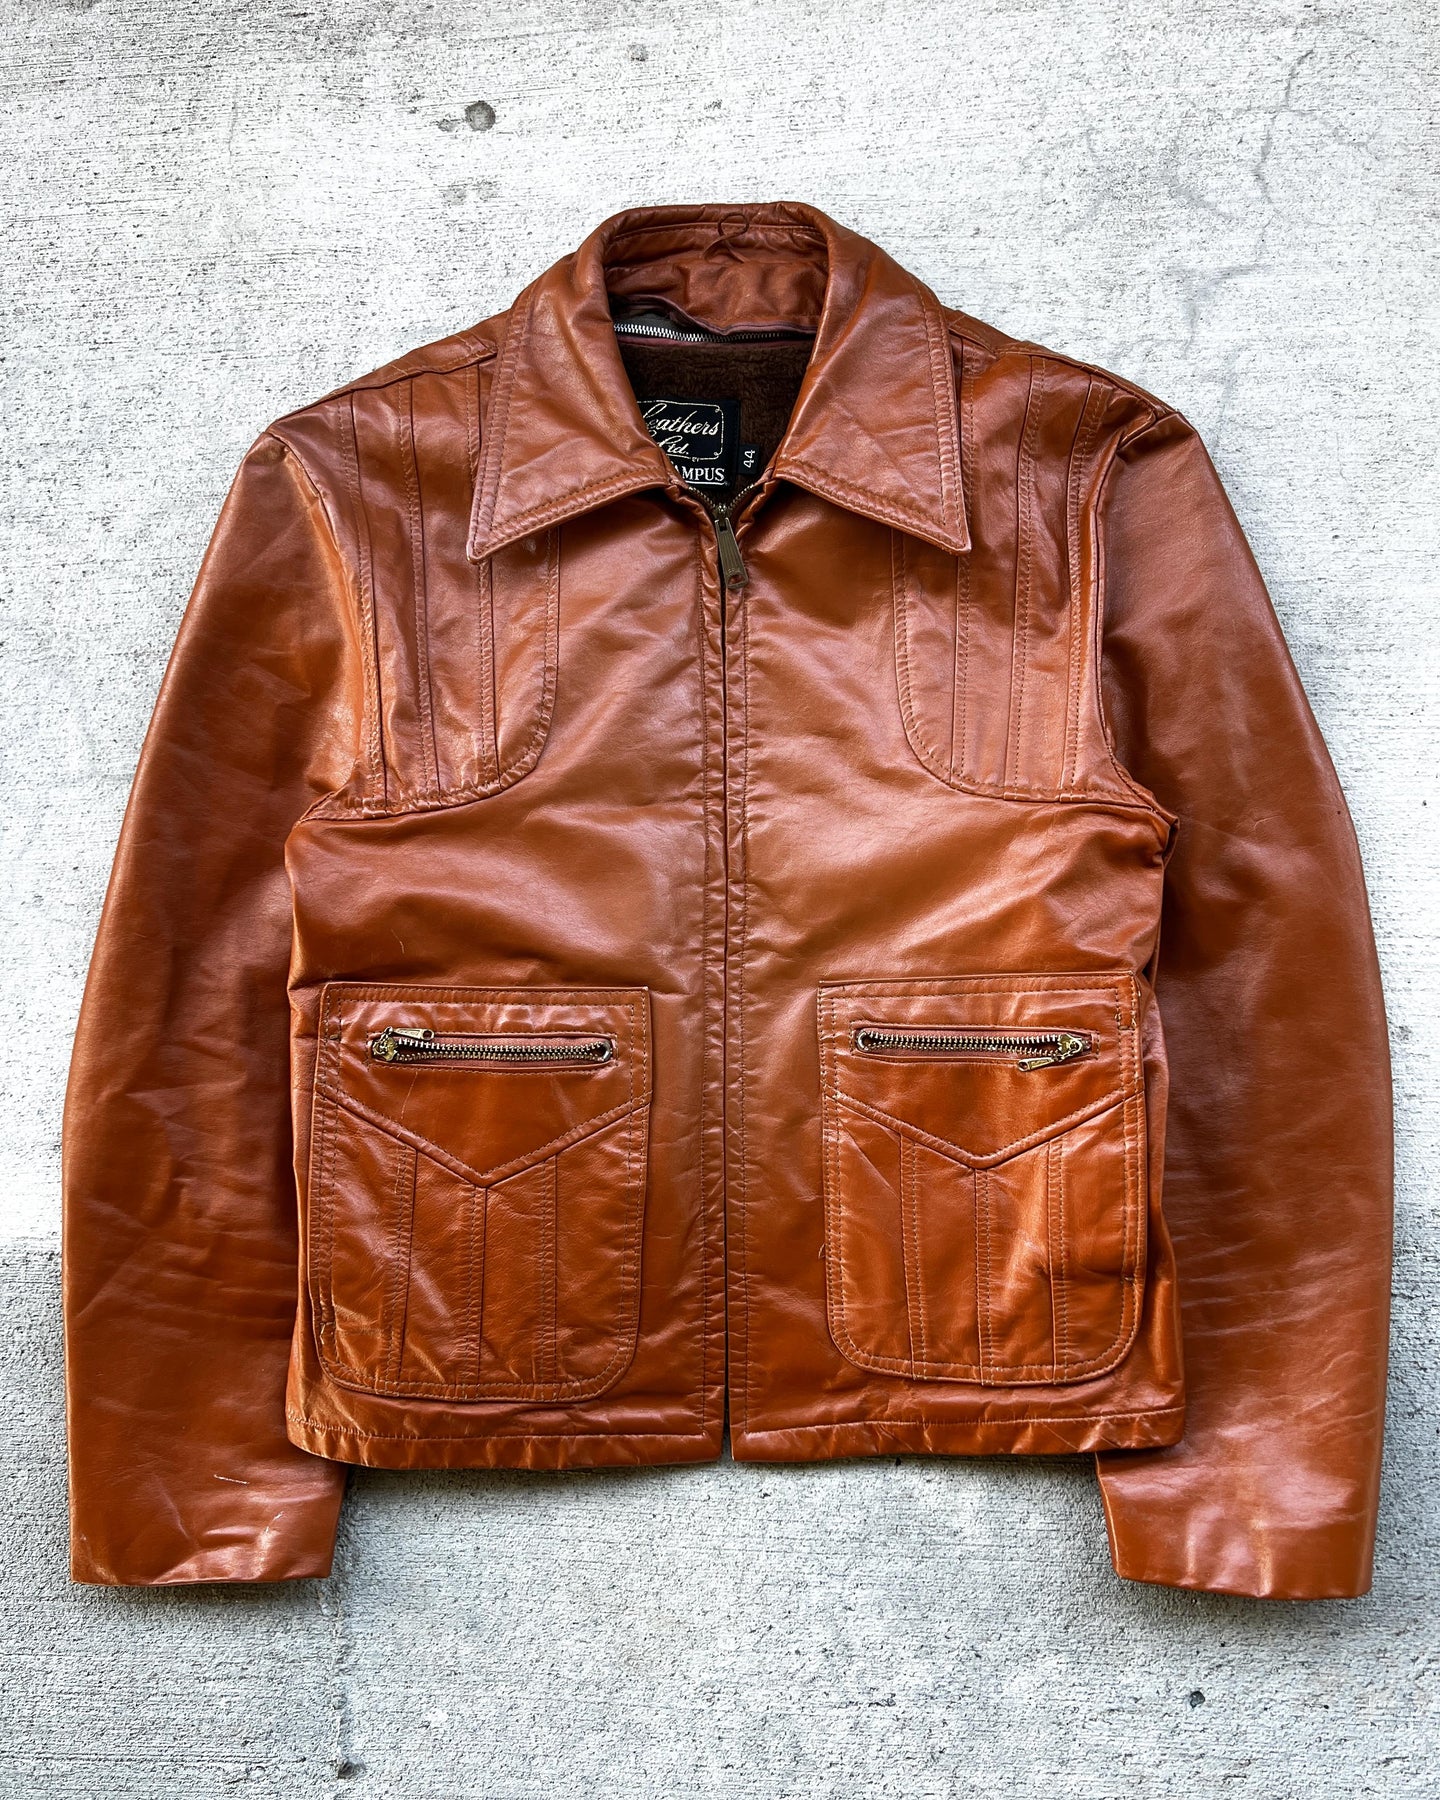 1970s Camel Brown Leather Jacket - Size Medium